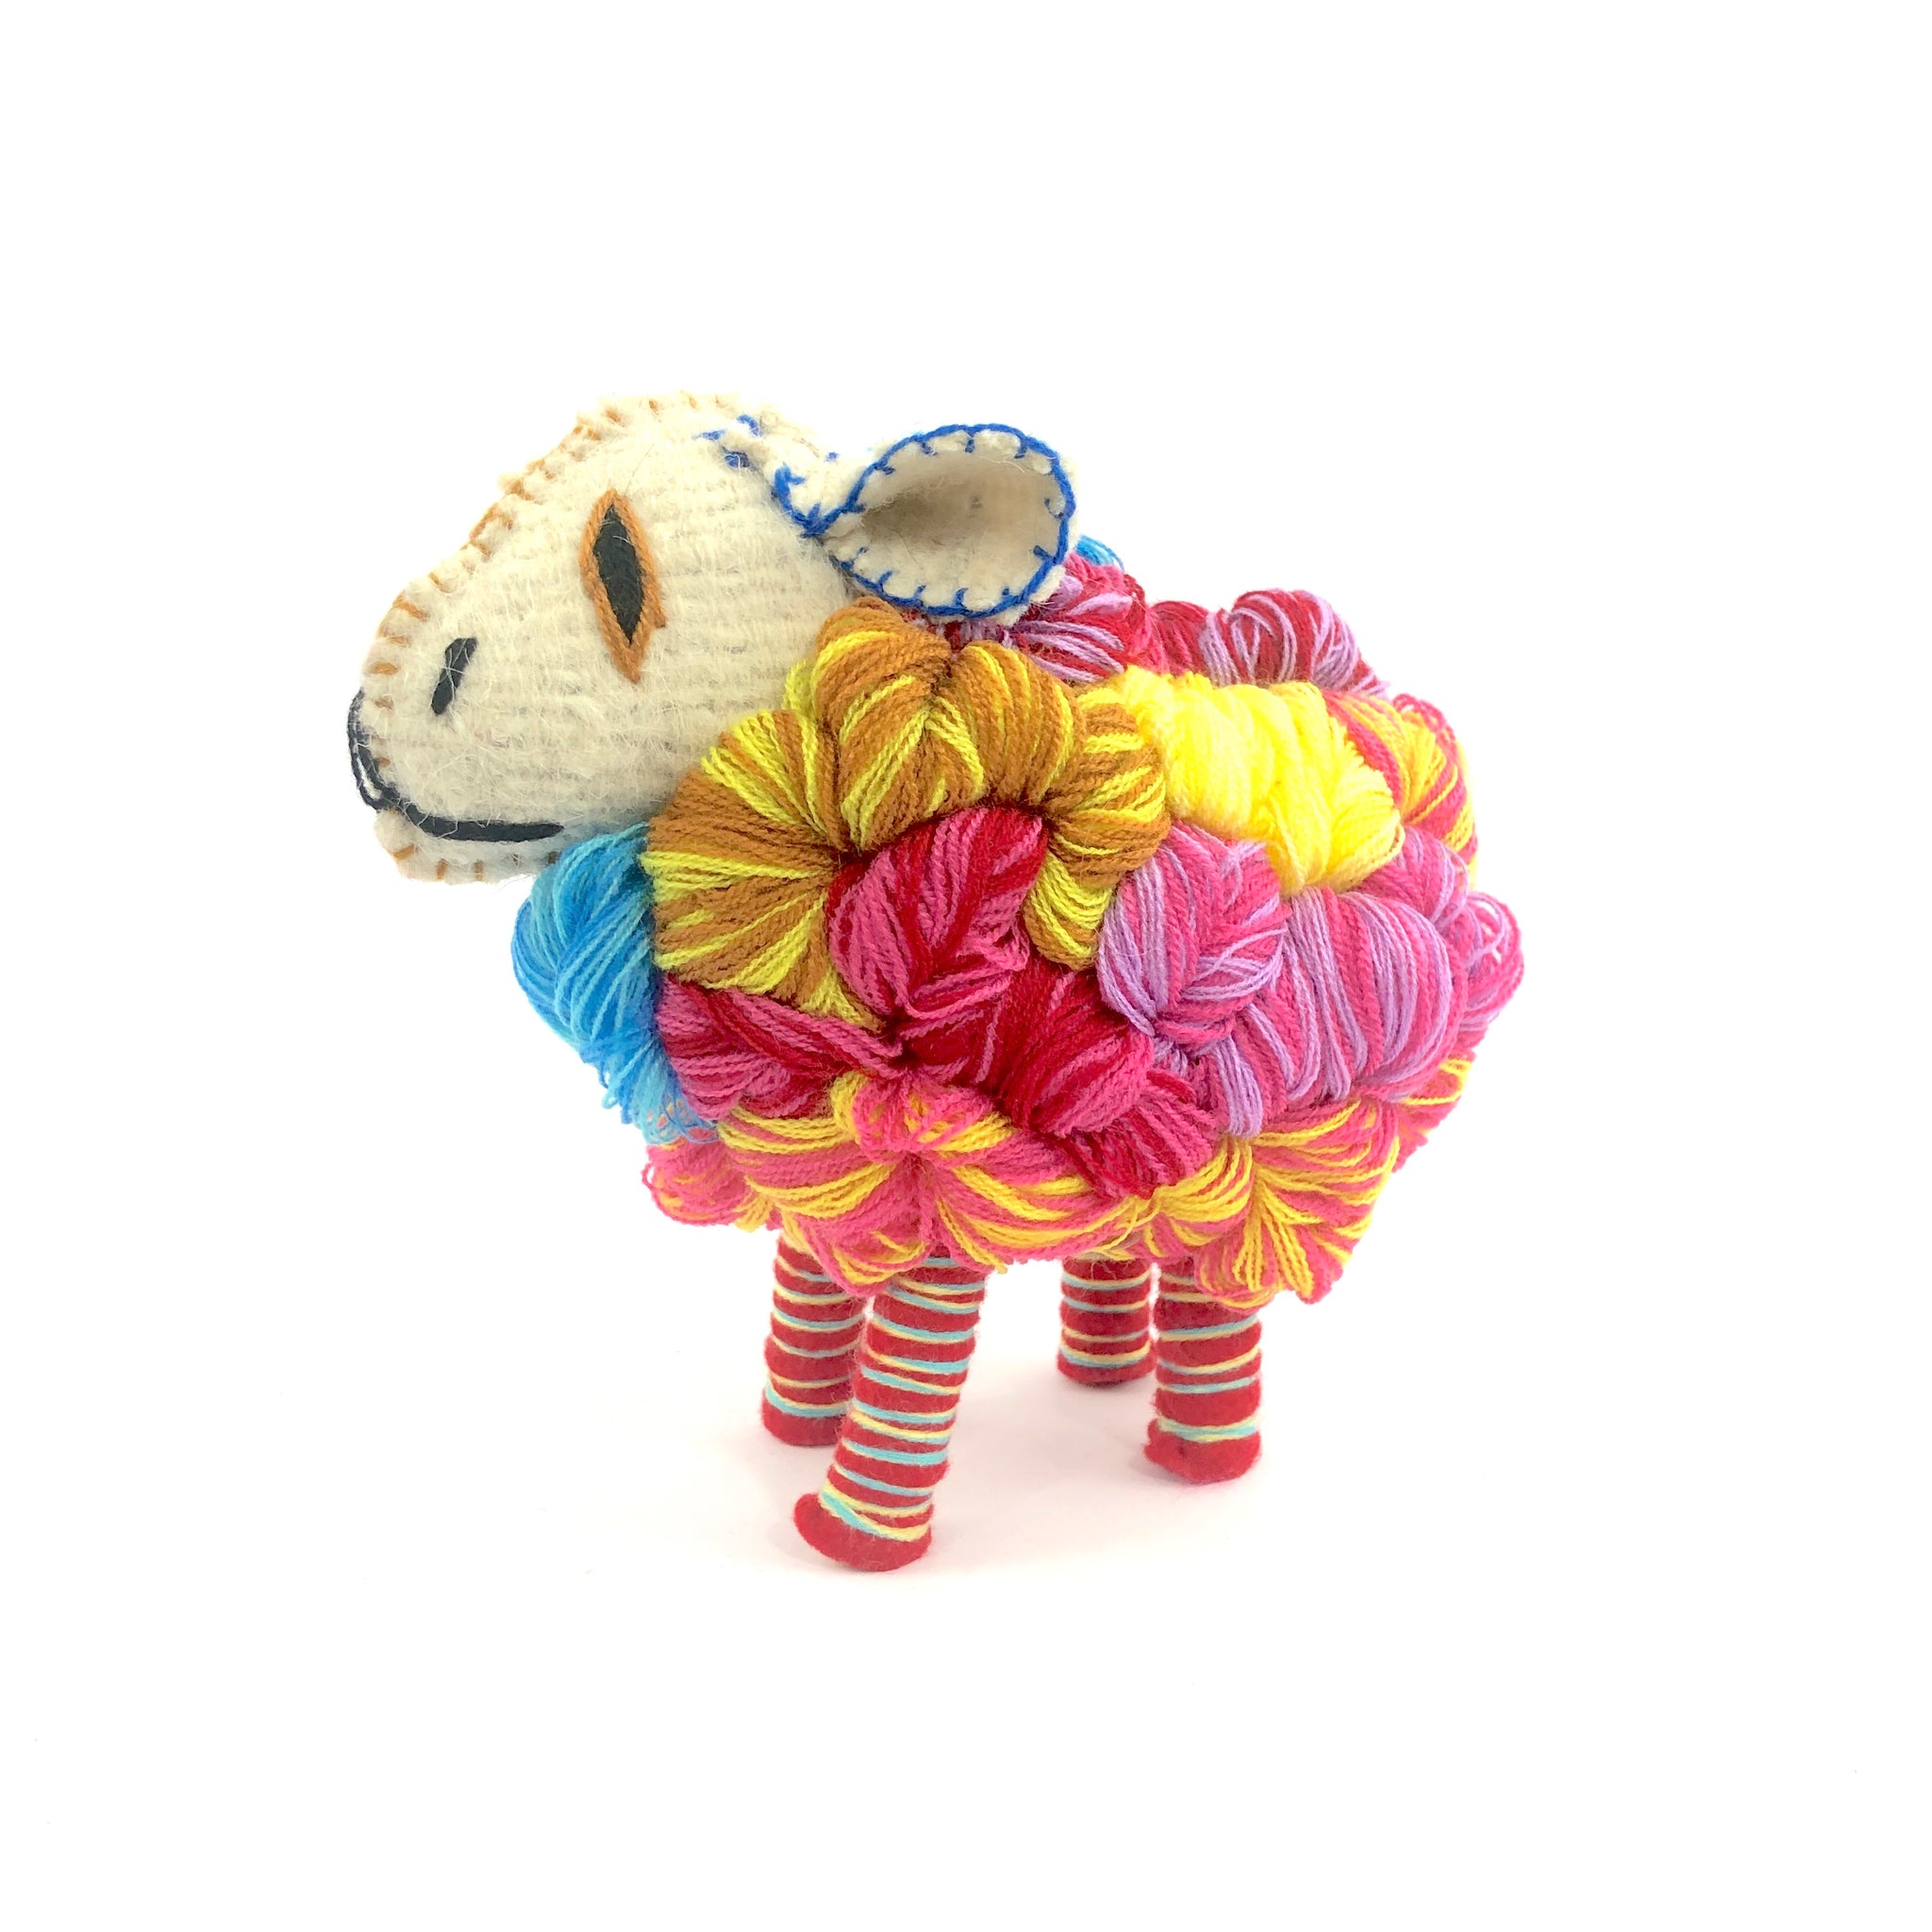 Mexican wool animals, Mexican folk art animals, Wool sheep decoration